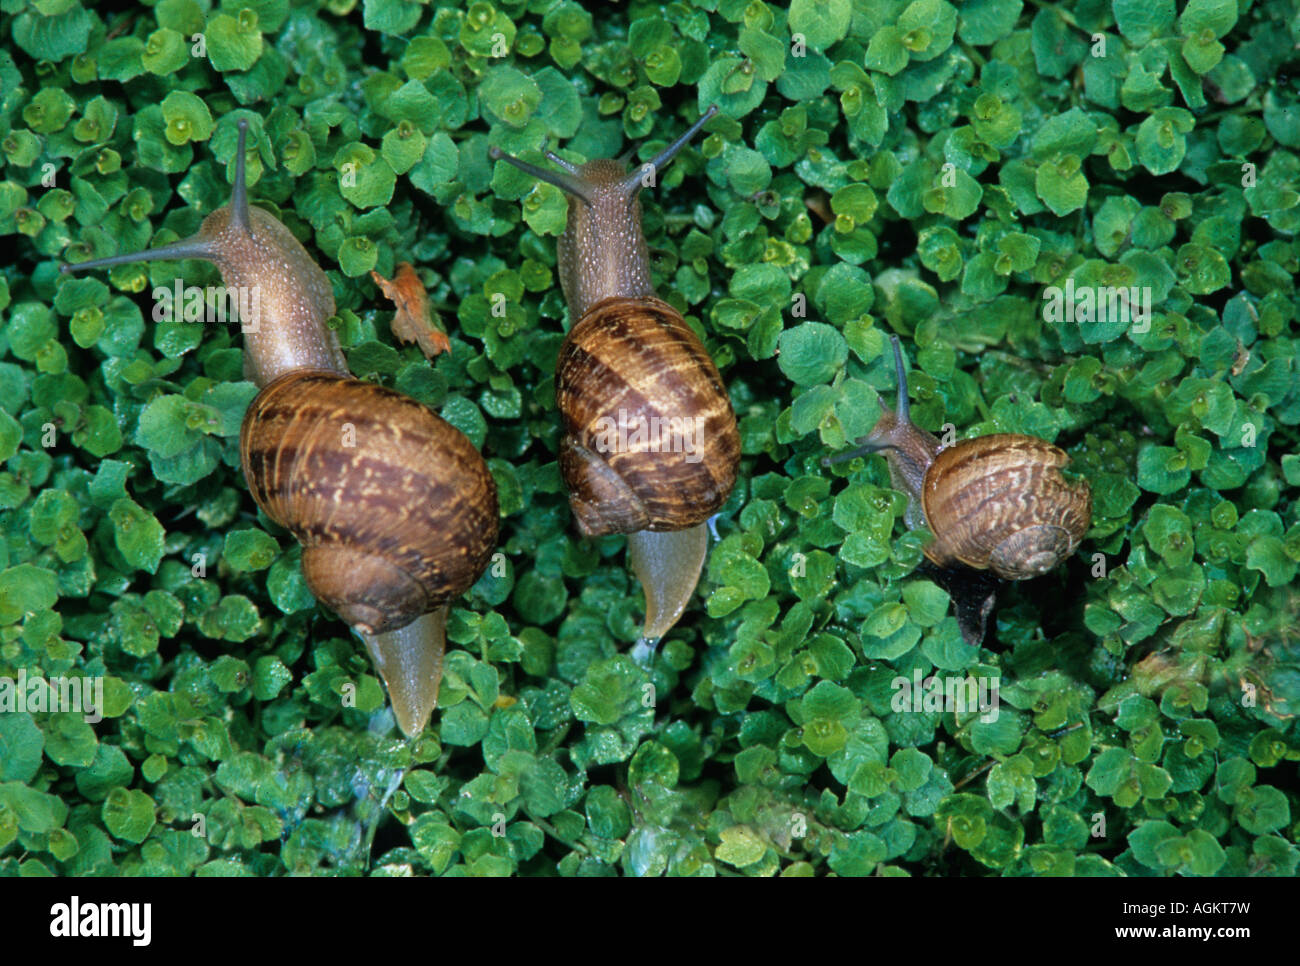 Three snails crawling through duckweed. Stock Photo